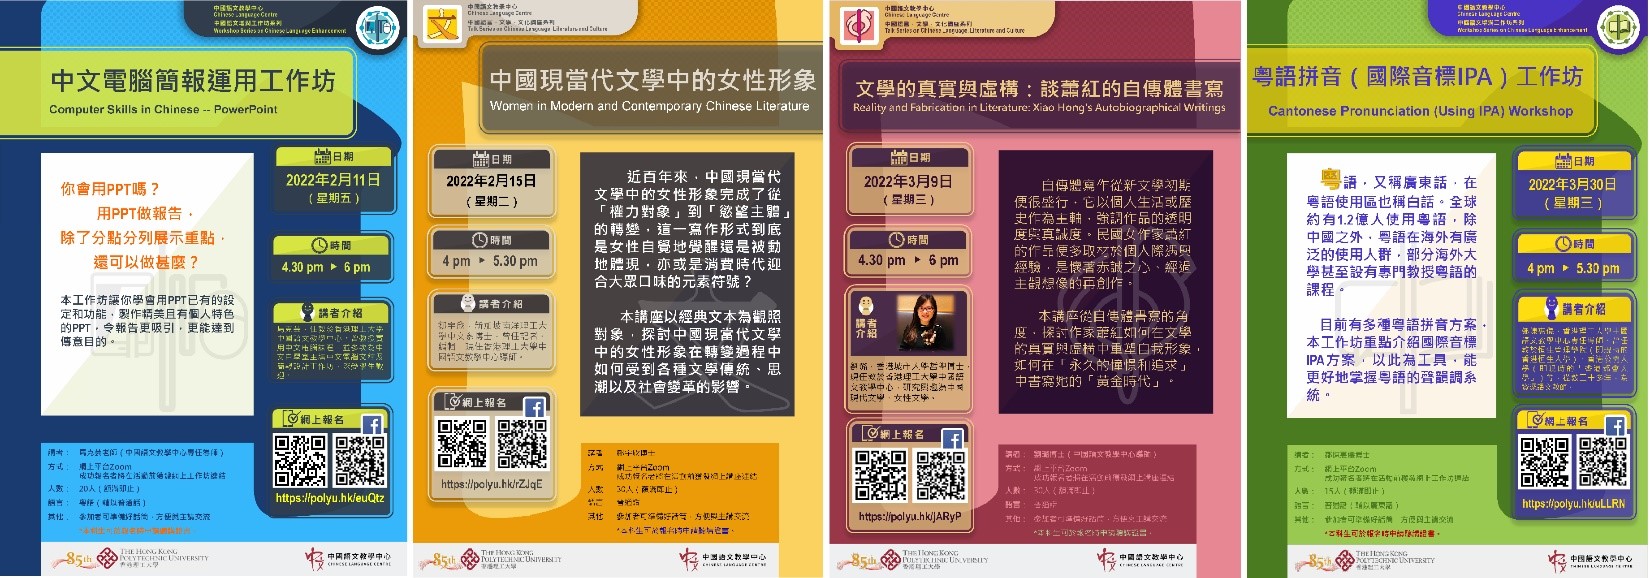 CLC Organised 4 online seminars 4 photos